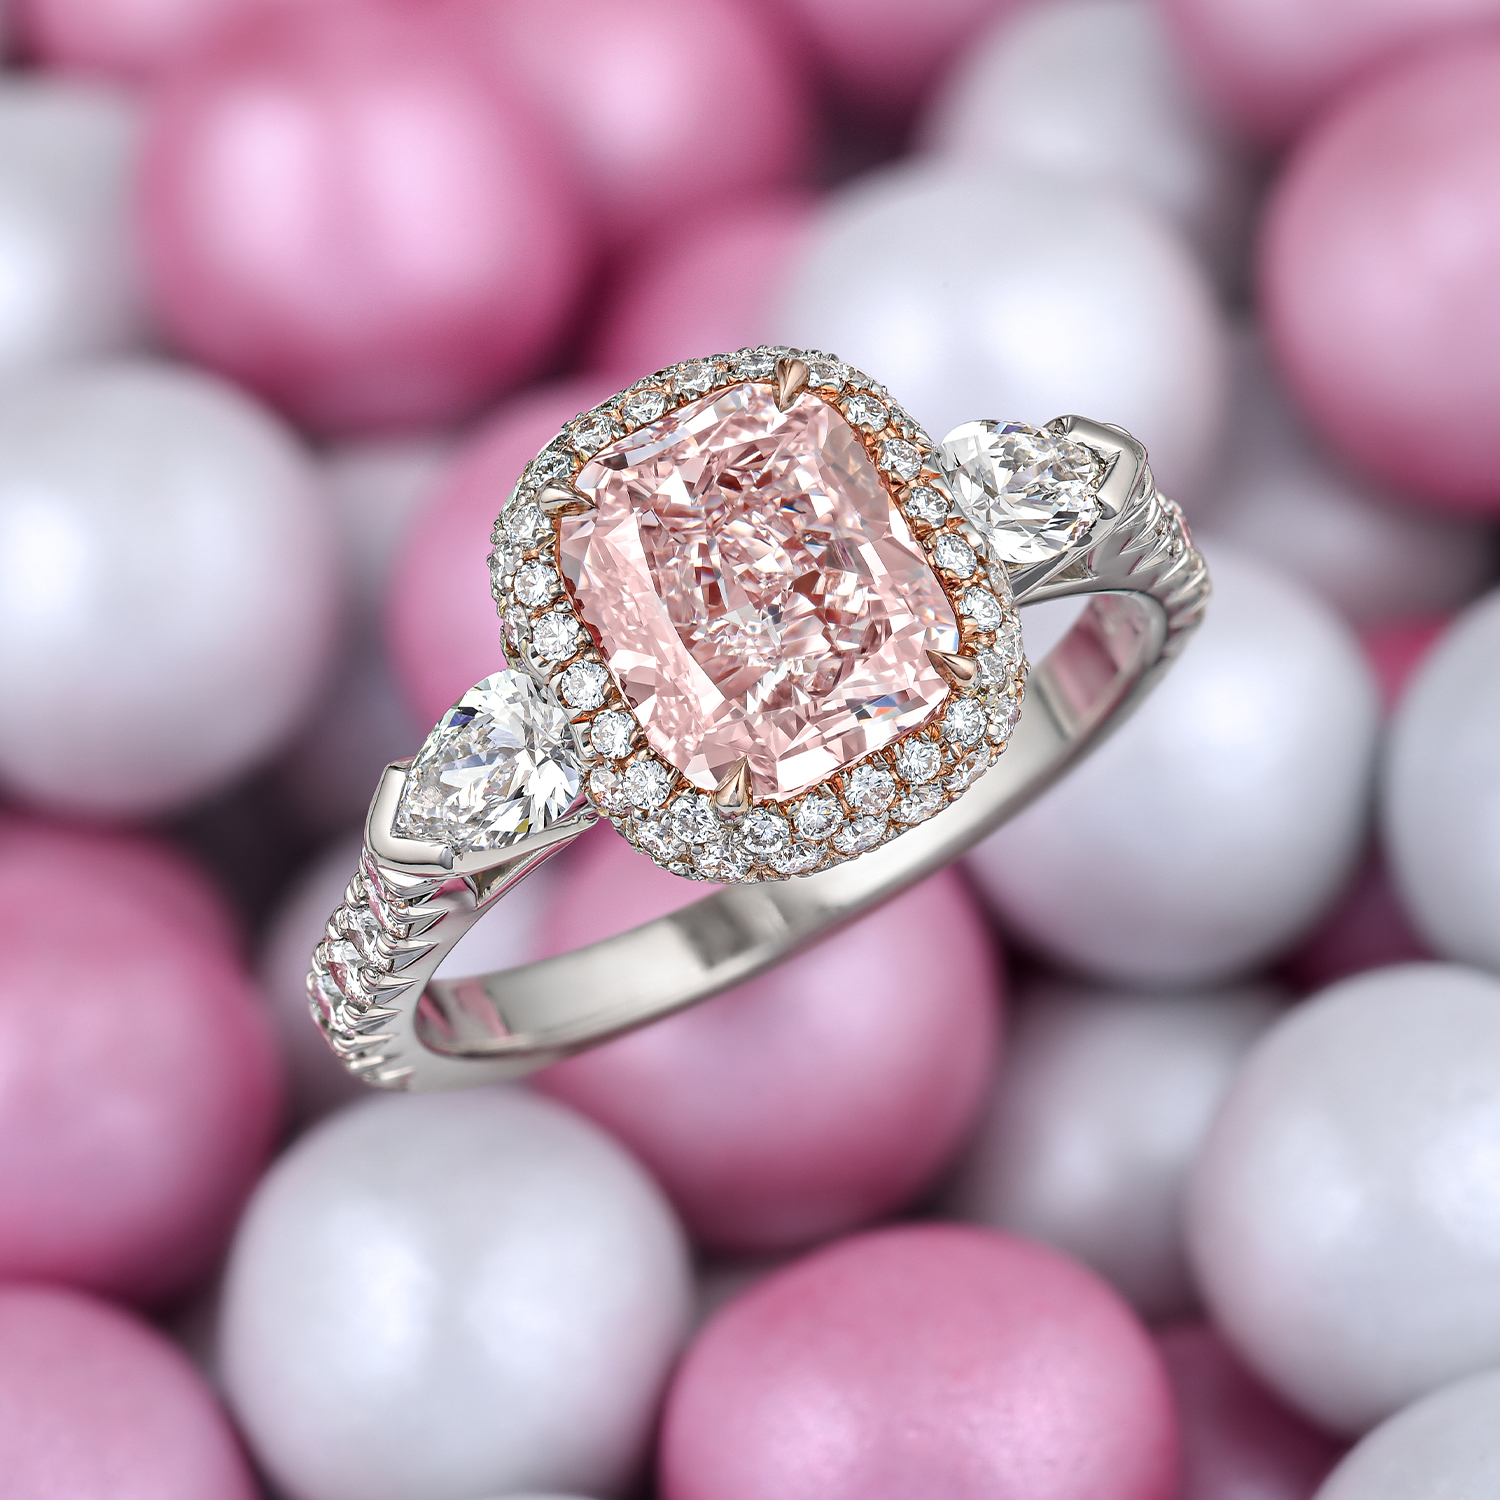 Pretty in Pink Diamonds: Breathtaking Natural Pink Diamond Jewelry